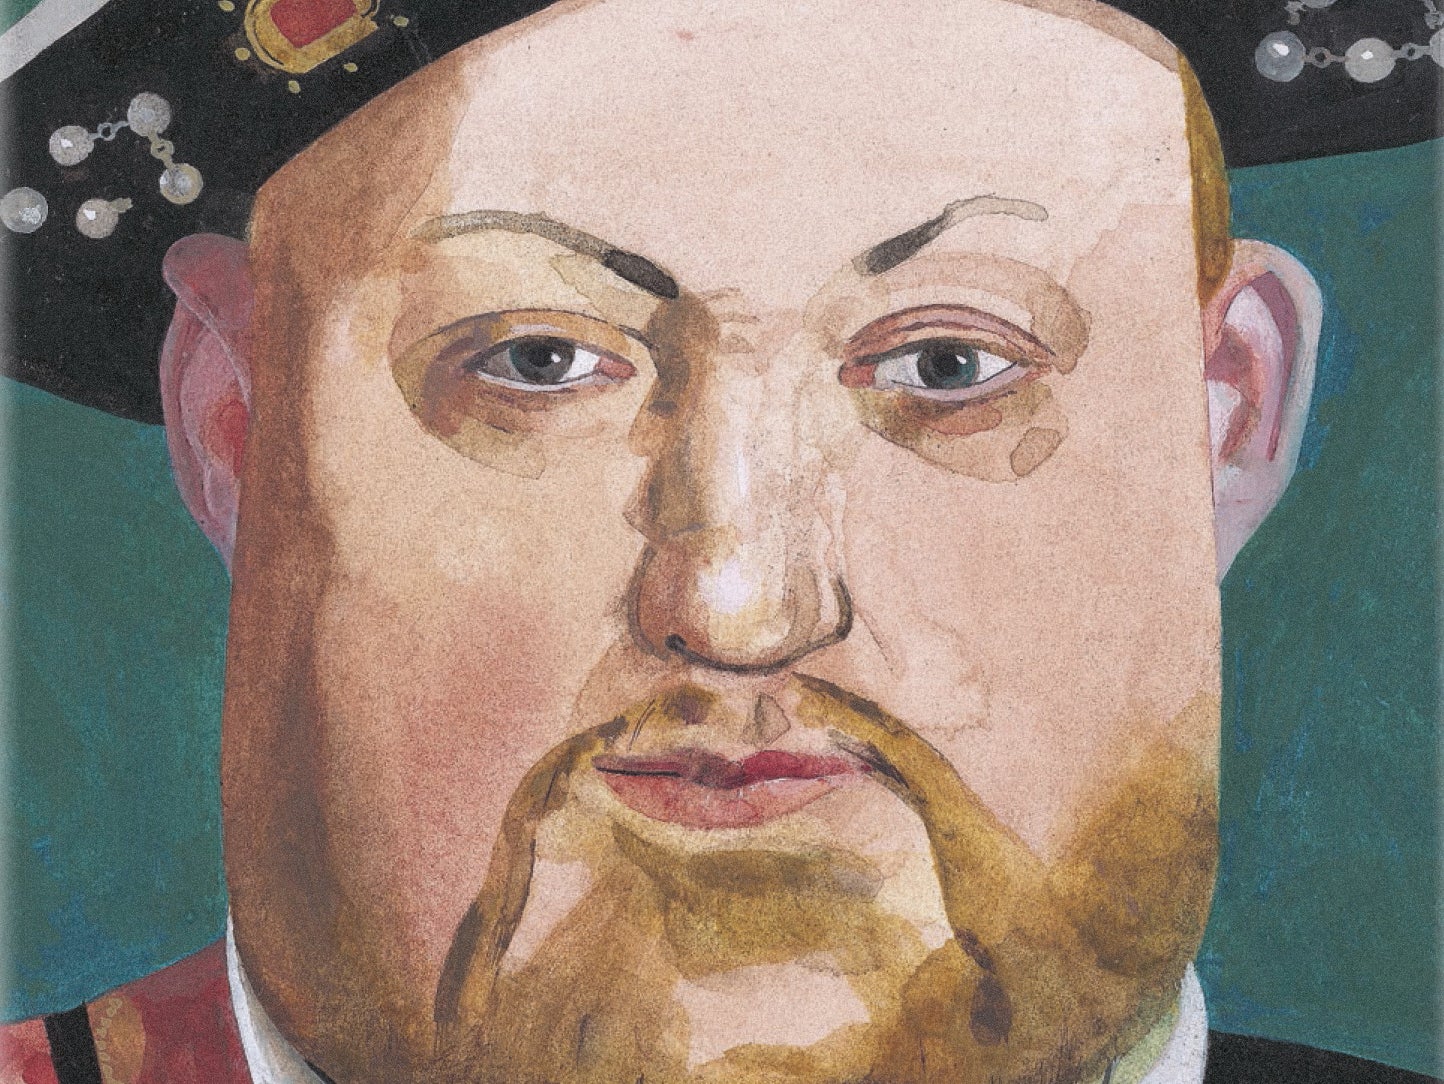 Henry VIII dating online